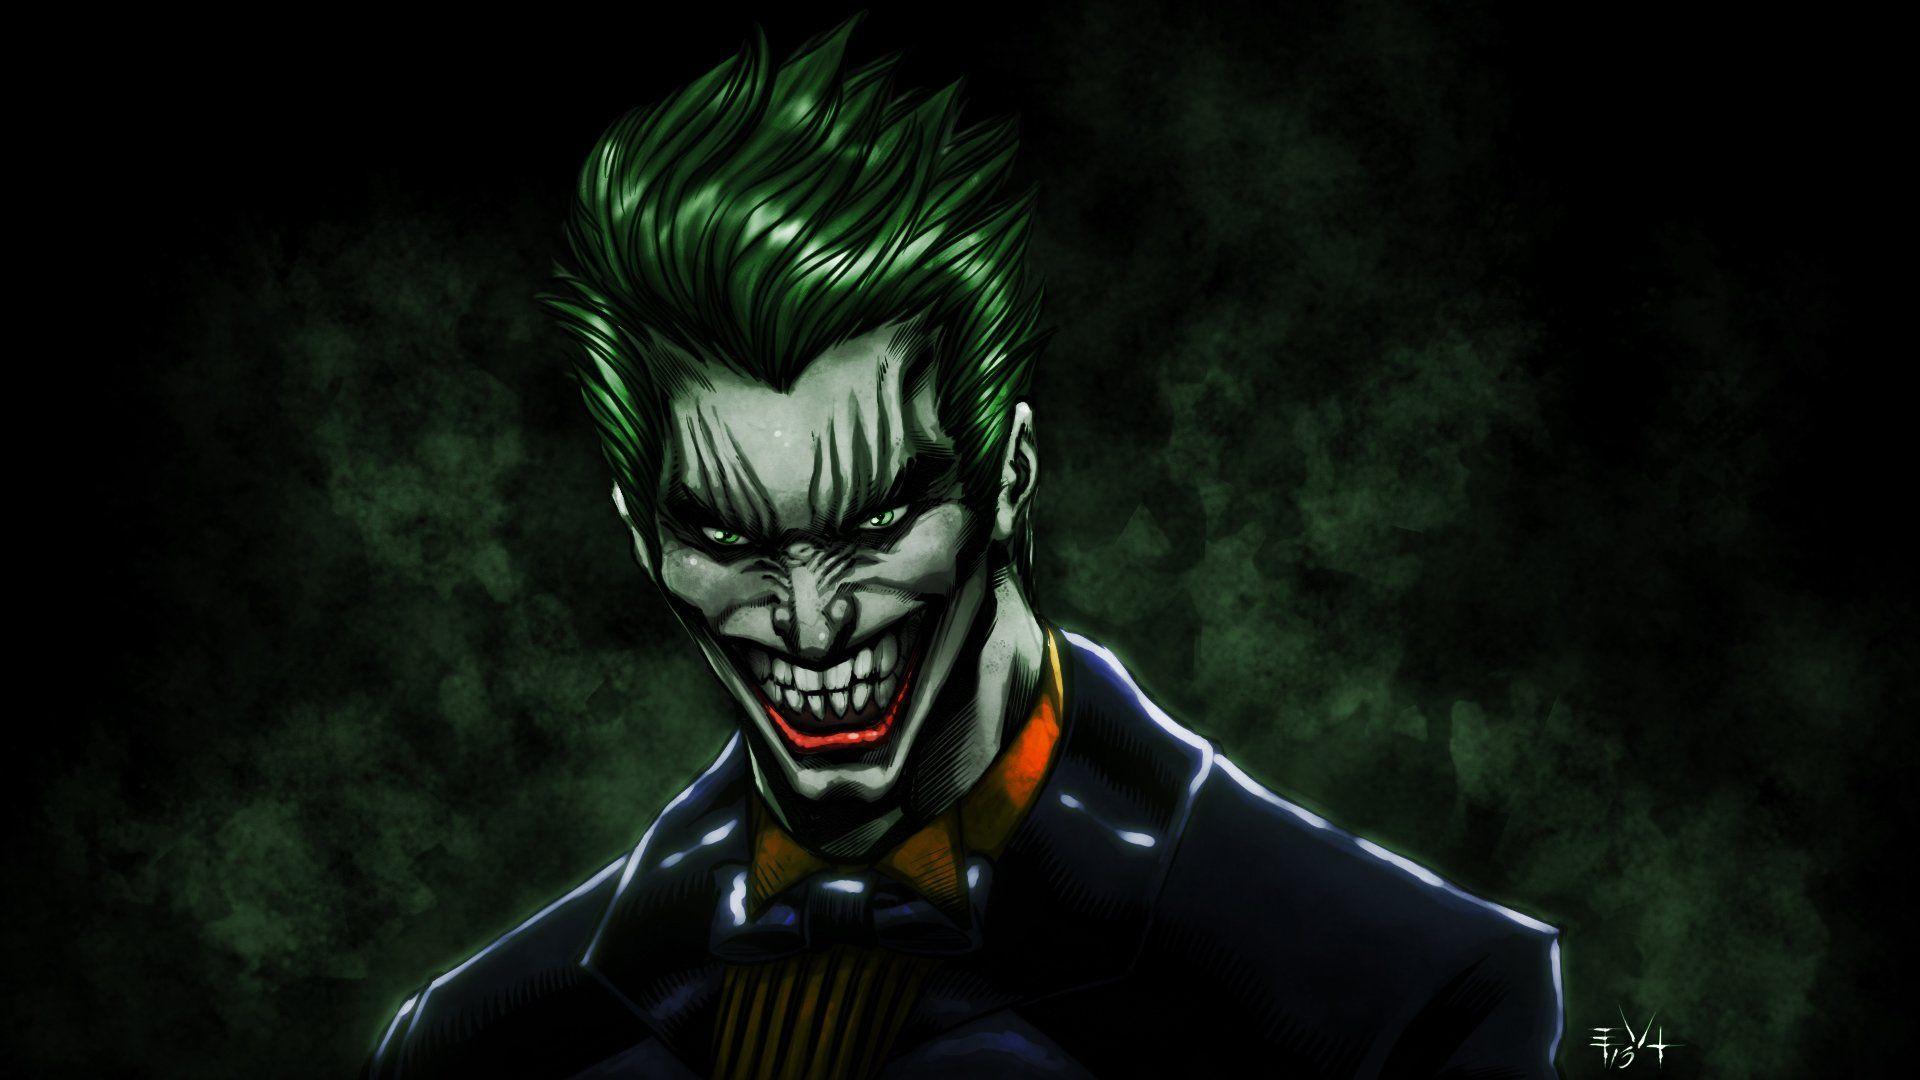 35 Gambar Wallpaper Hd Kartun Joker terbaru 2020